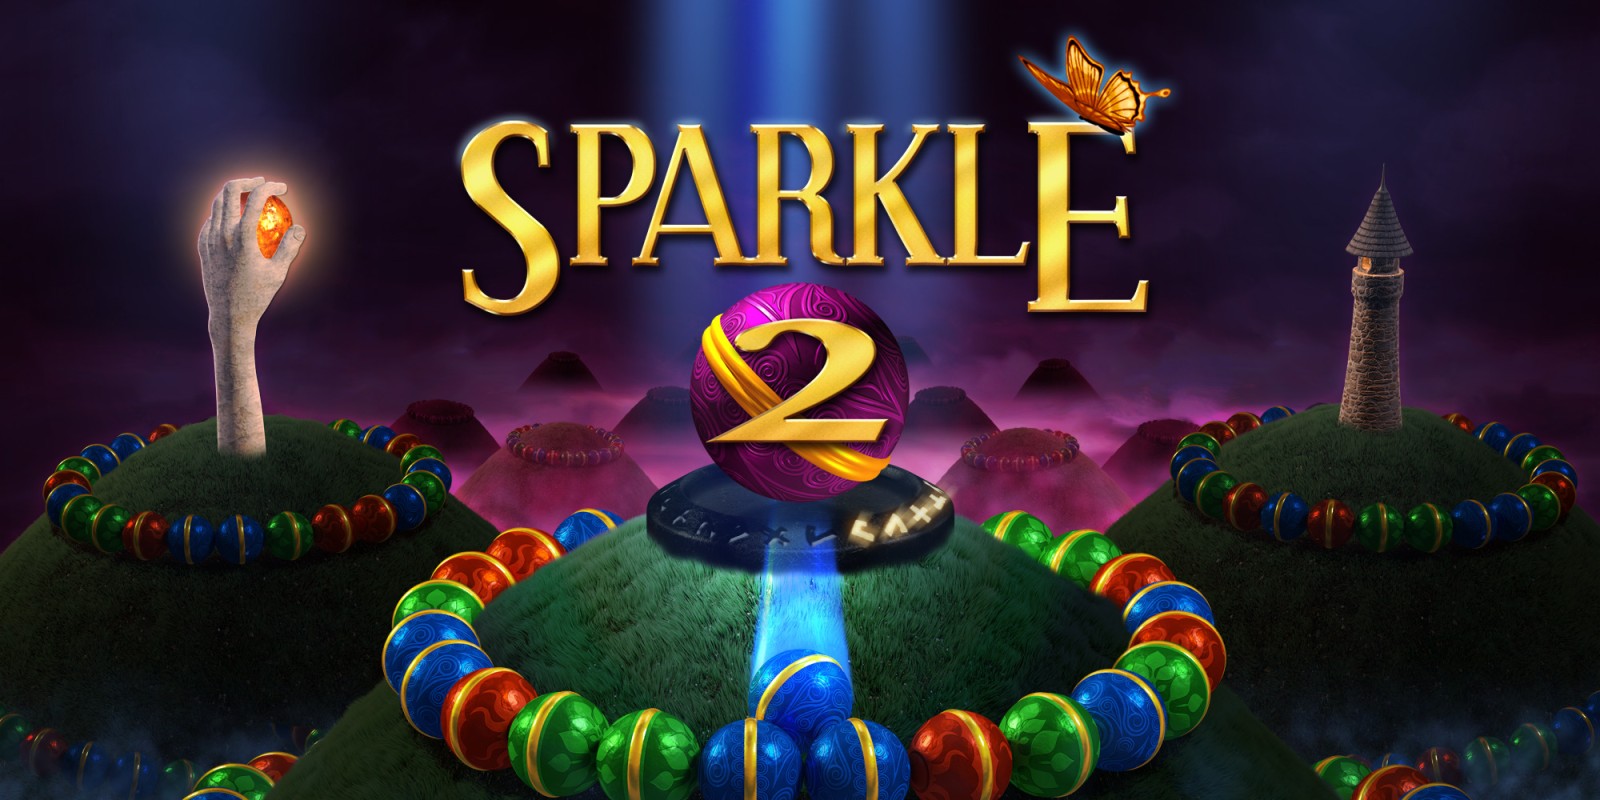 sparkle 2 game